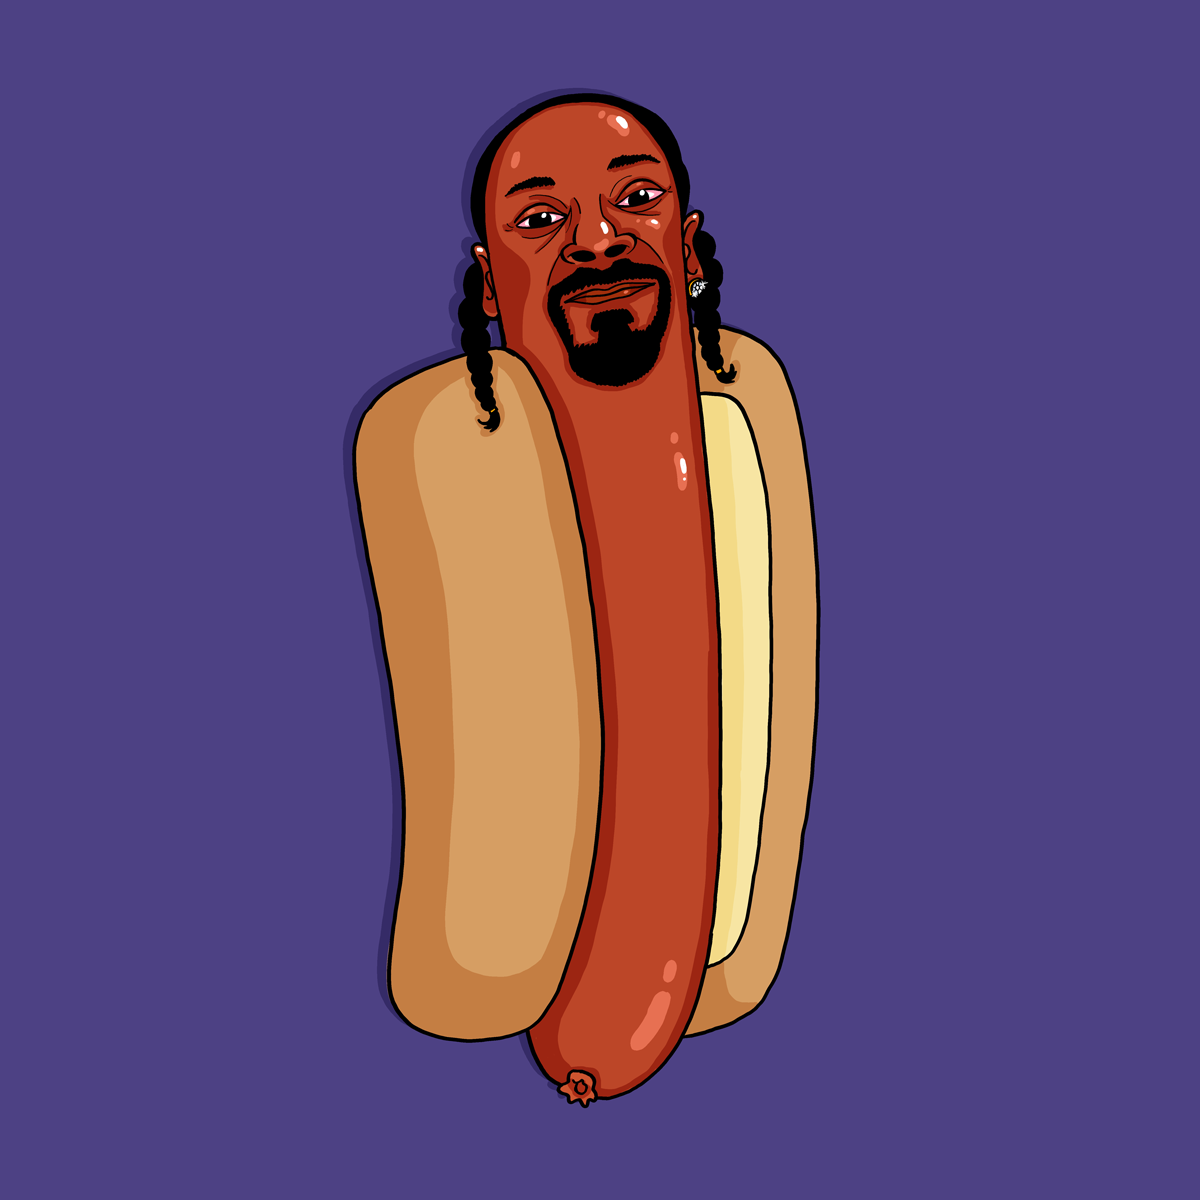 Tag Archive for "hotdog" - Chris Piascik